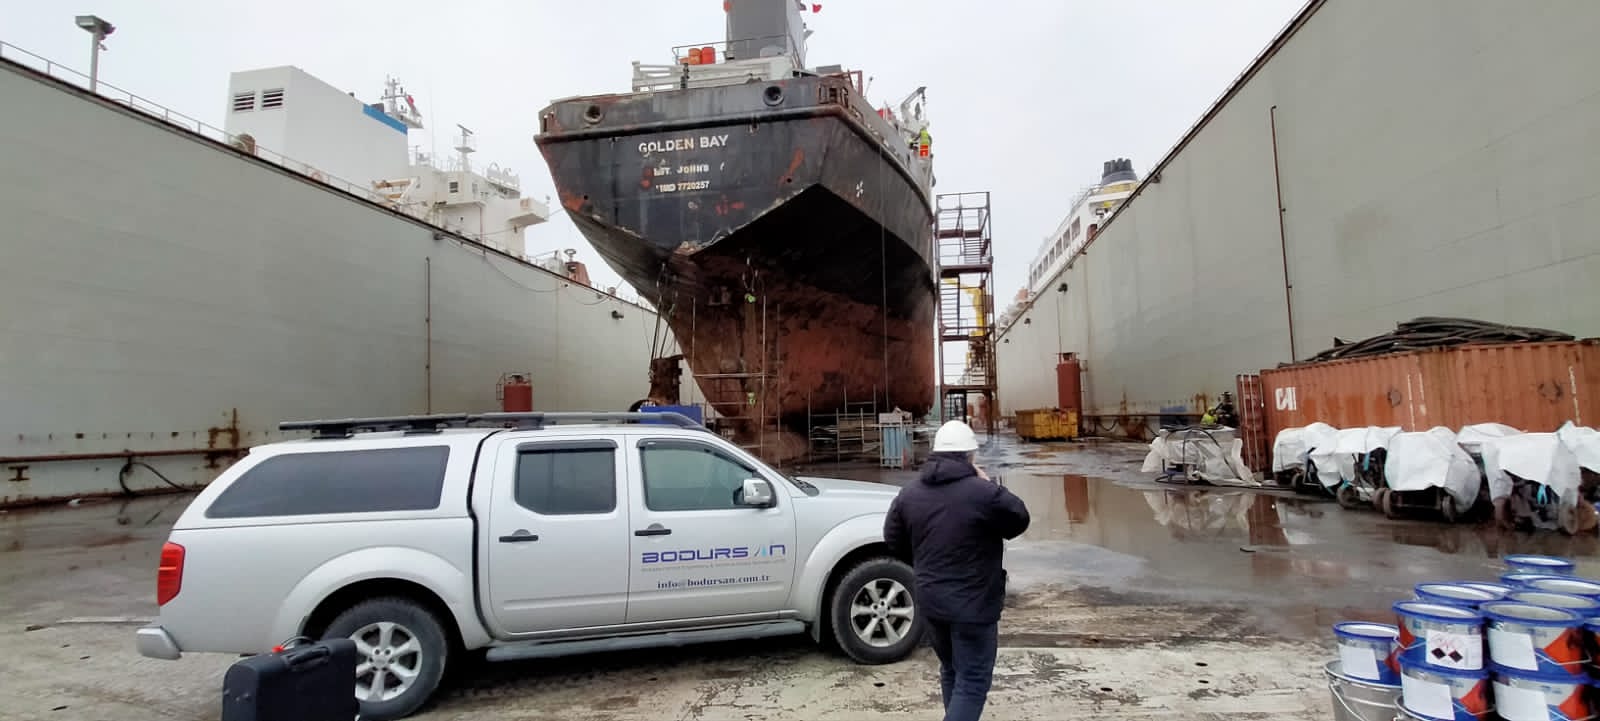 Bodursan Dry-Dock Ship Repair Management